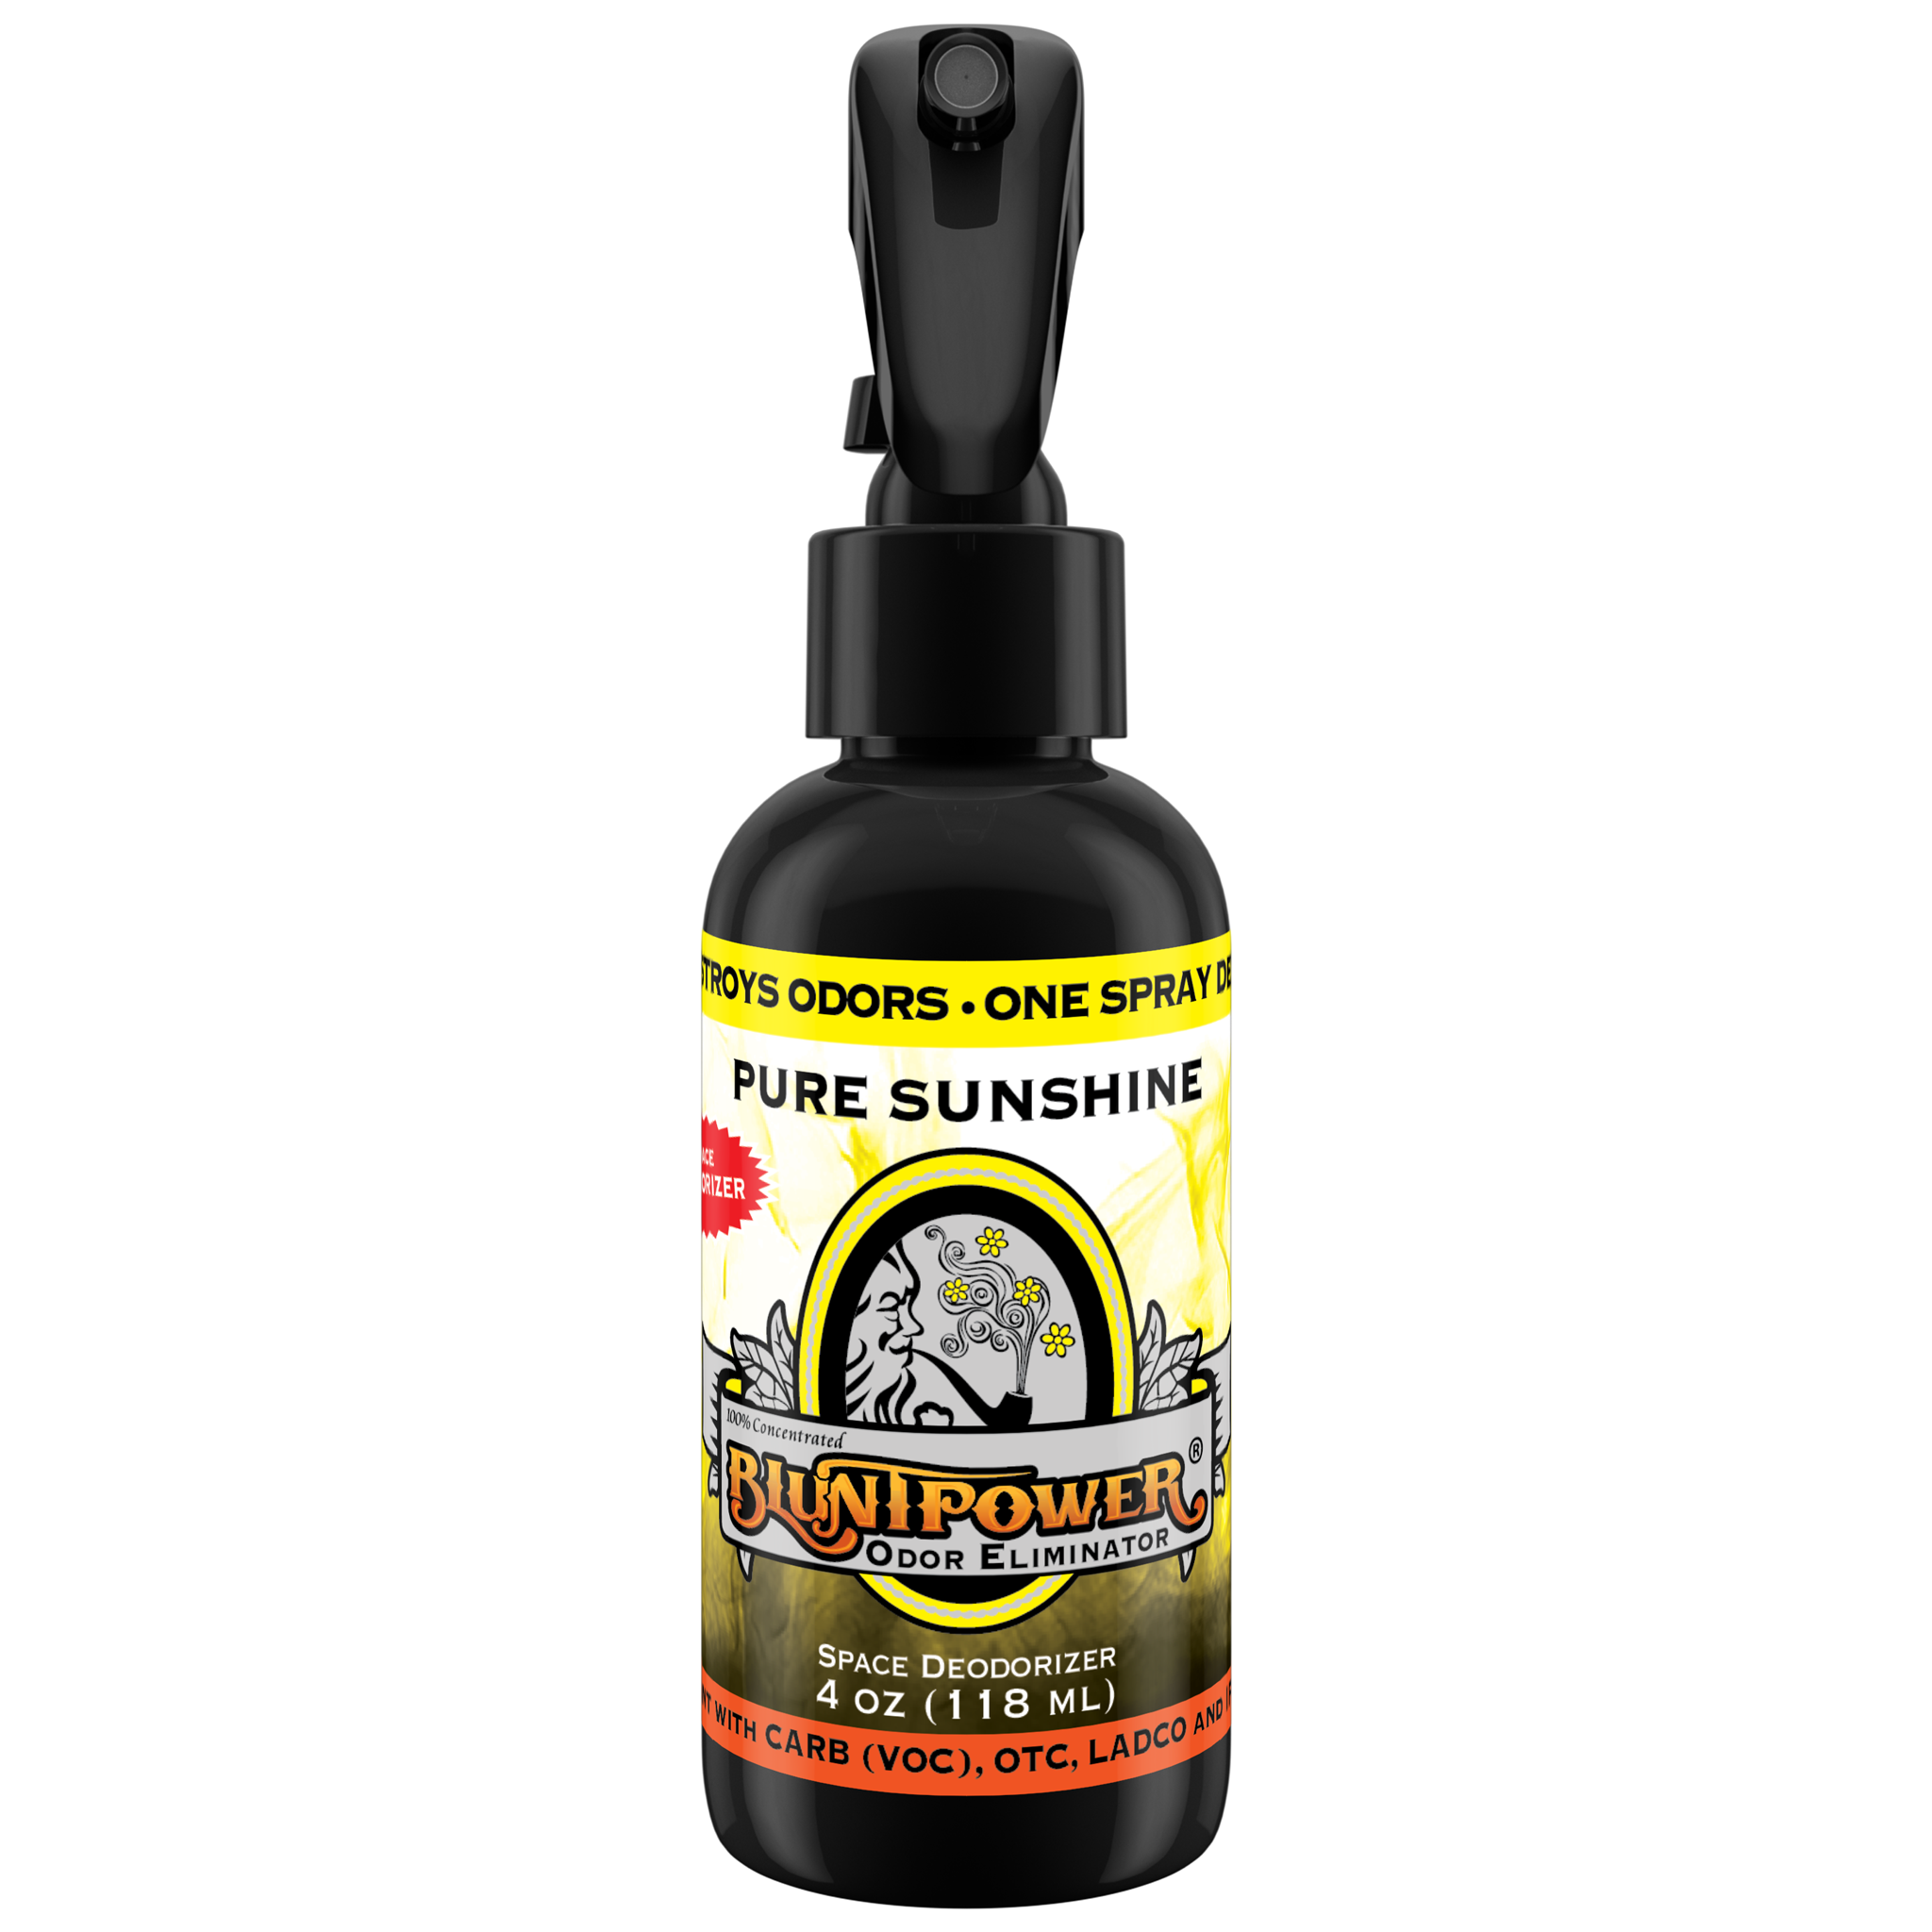 BluntPower Odor Eliminator - Pure Sunshine Size: 4 fl oz